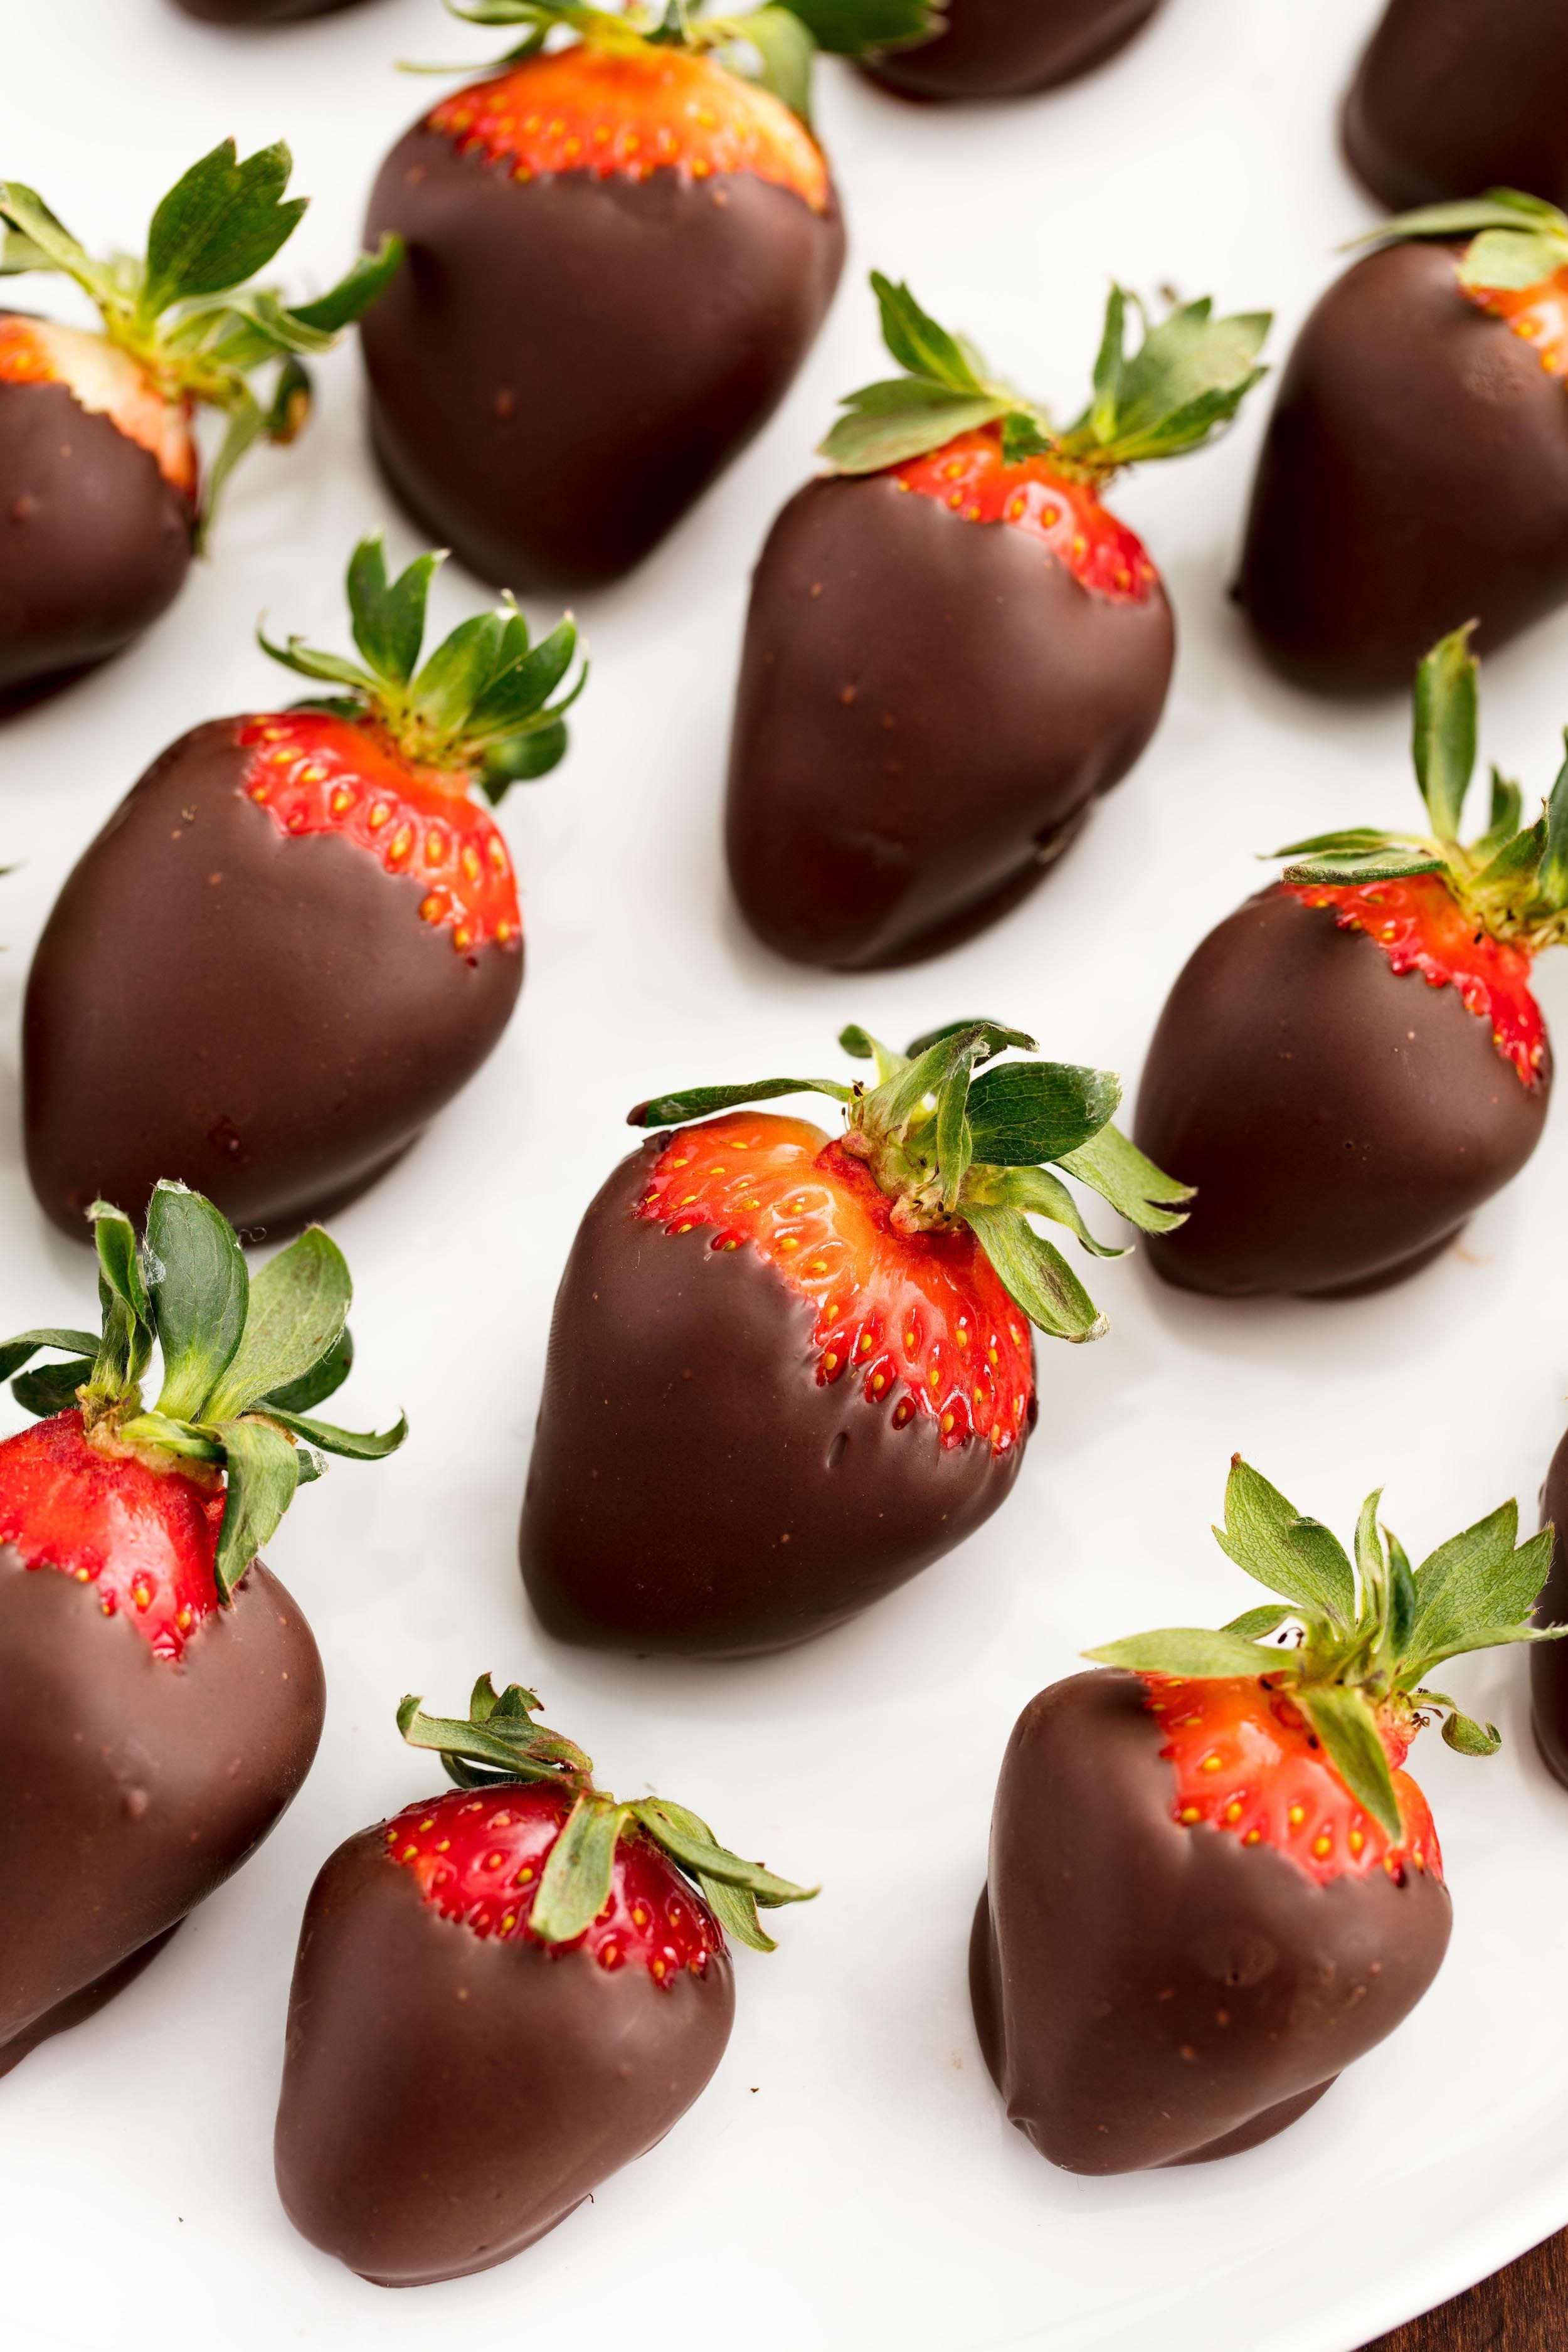 Best Chocolate Covered Strawberries Recipe How To Make Chocolate Covered Strawberries